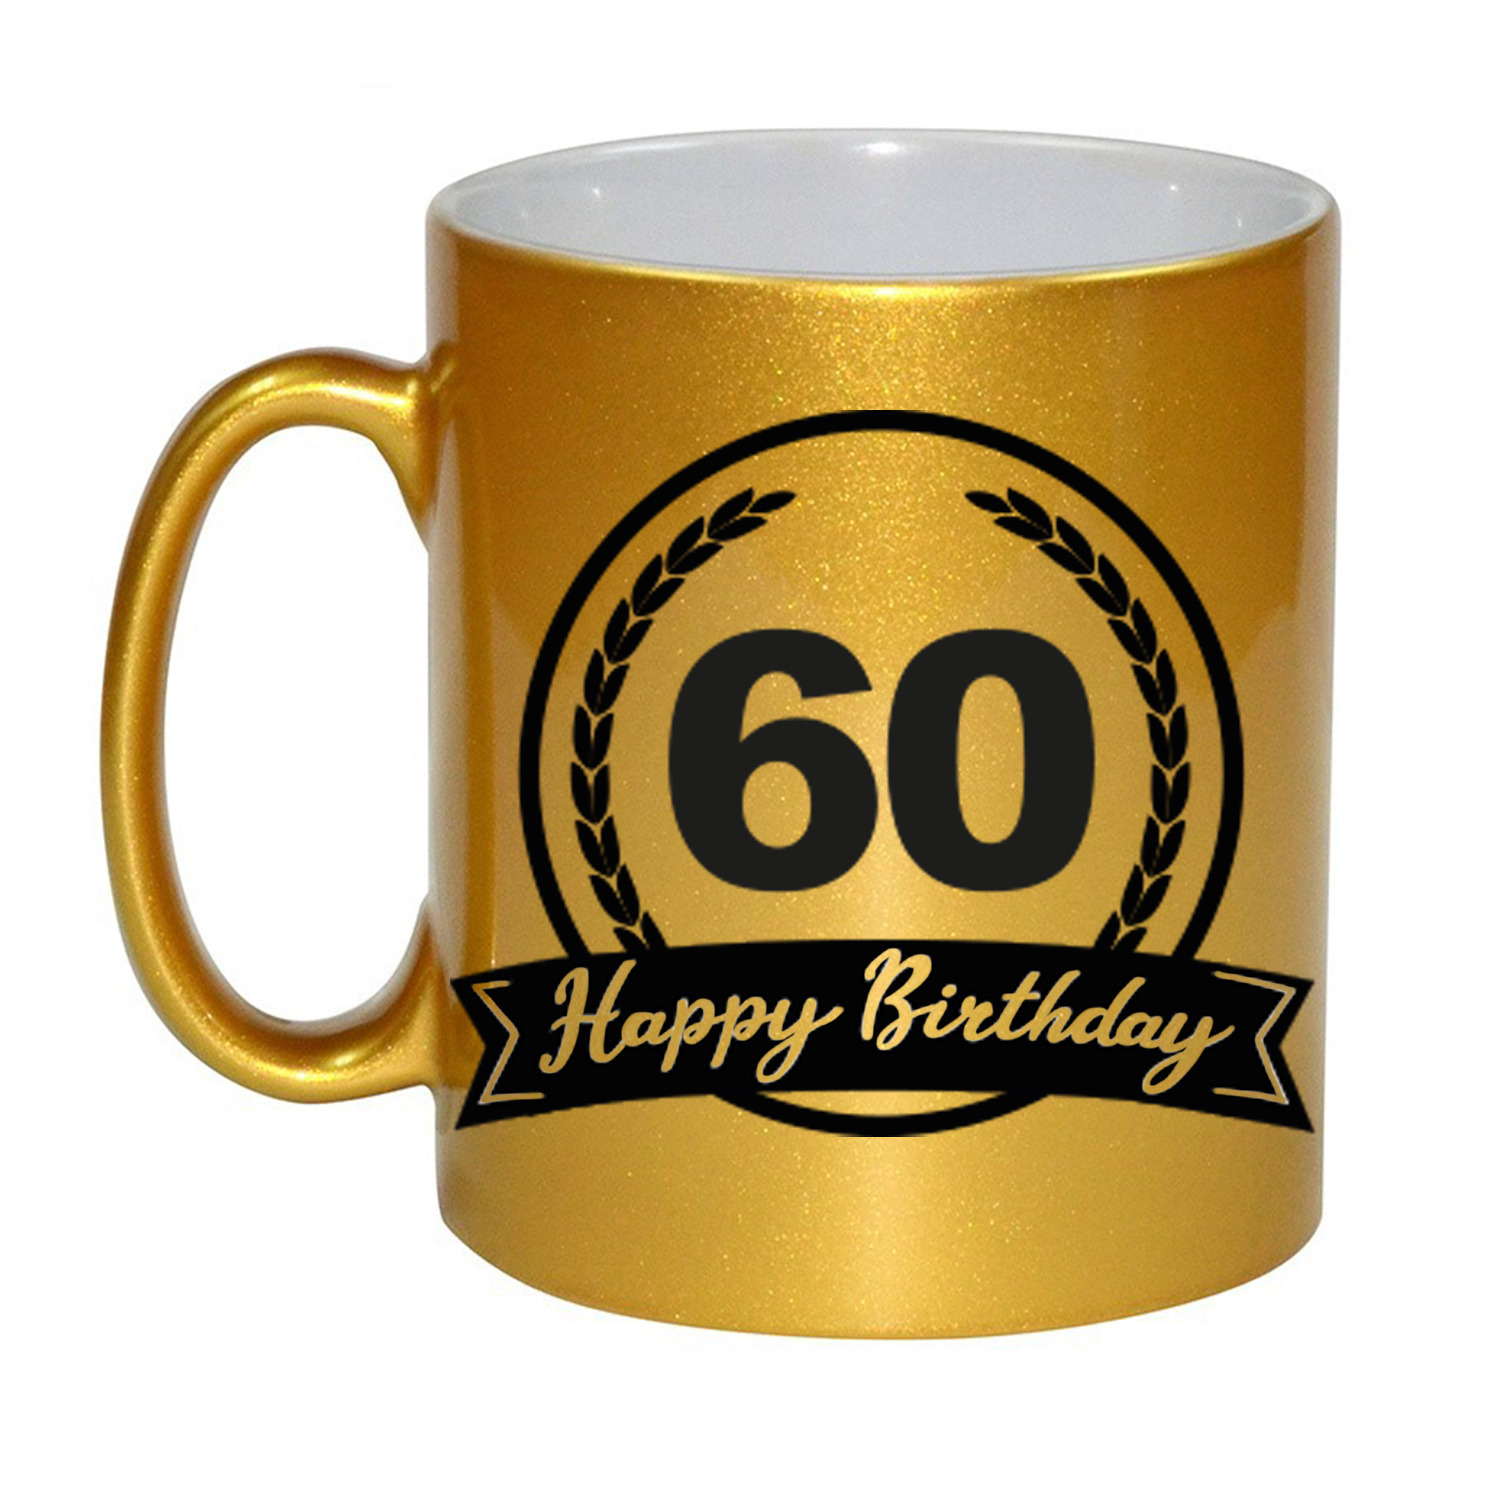 Happy Birthday 60 years gouden cadeau mok-beker met wimpel 330 ml